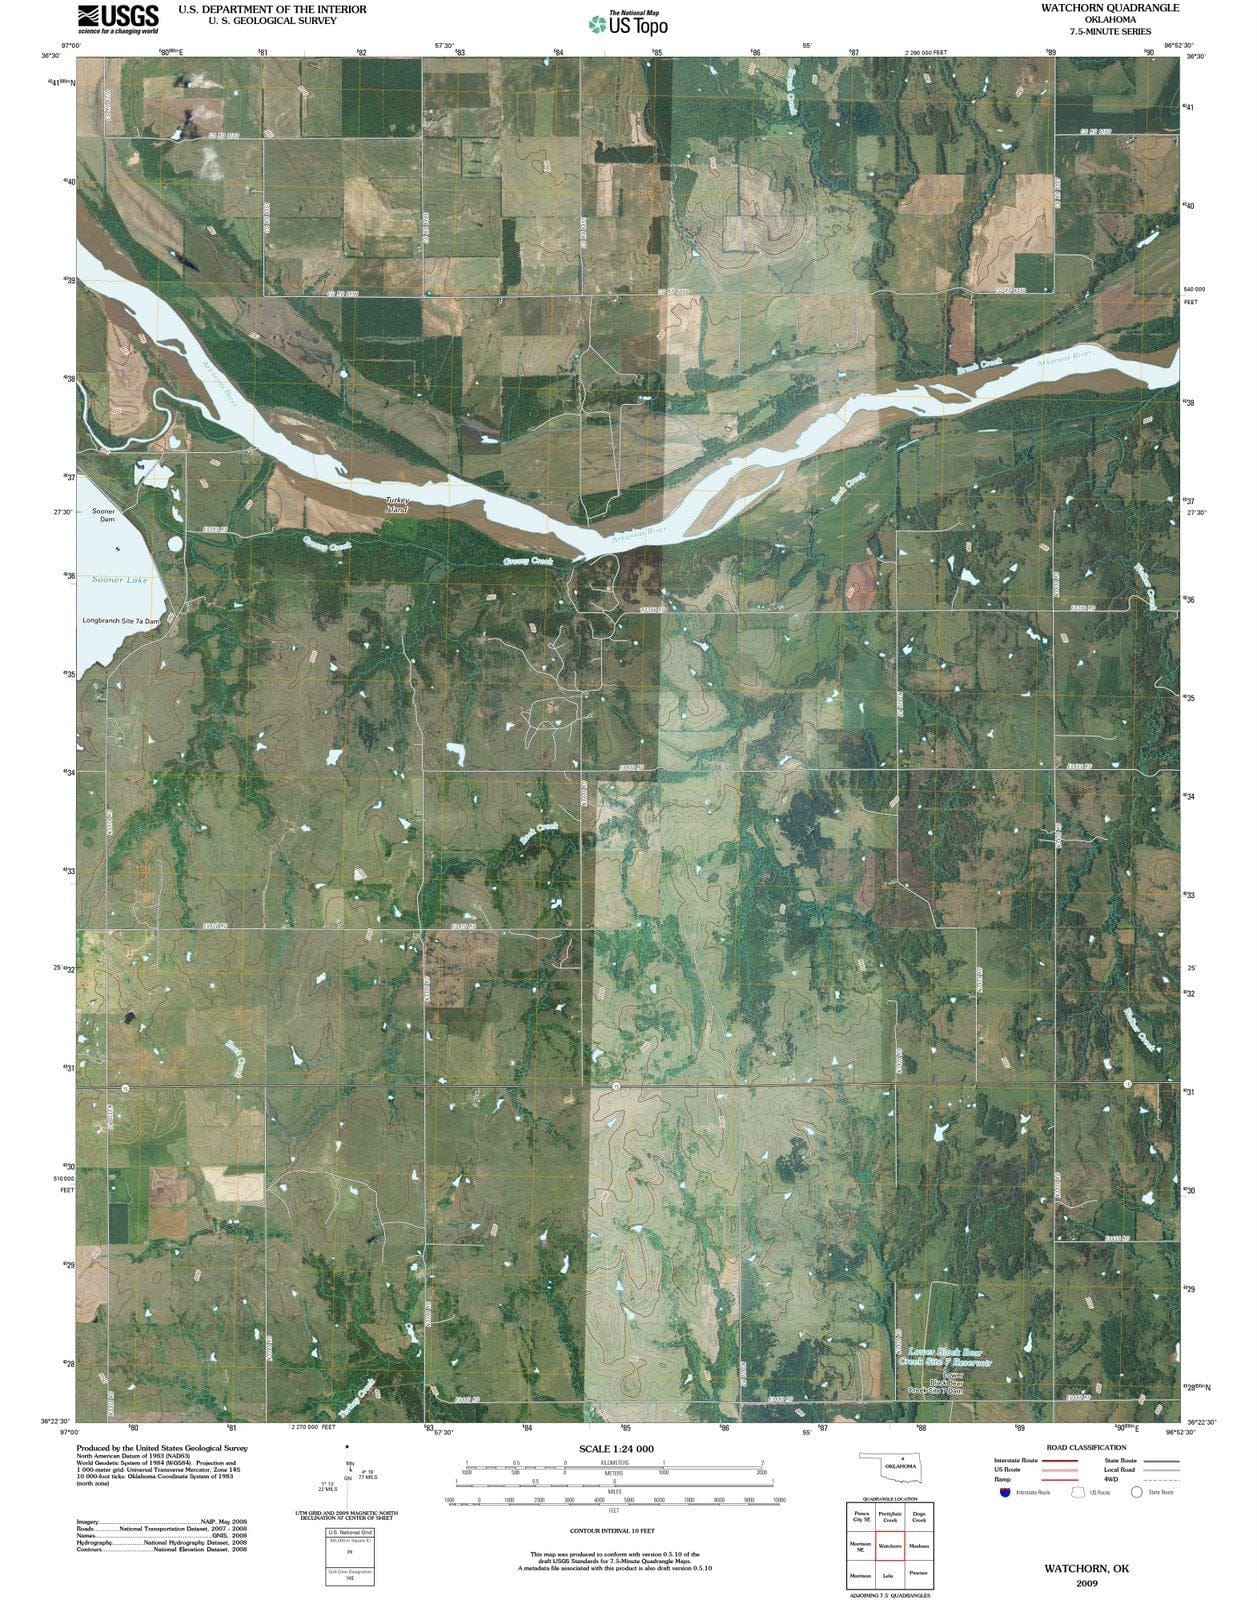 2009 Watchorn, OK - Oklahoma - USGS Topographic Map